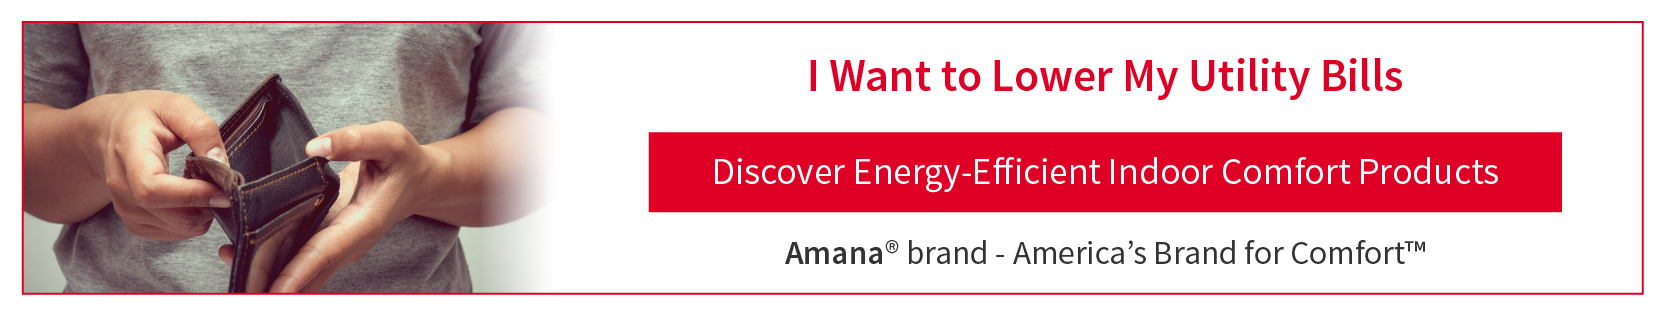 Cost Saving Legacy of Amana brand